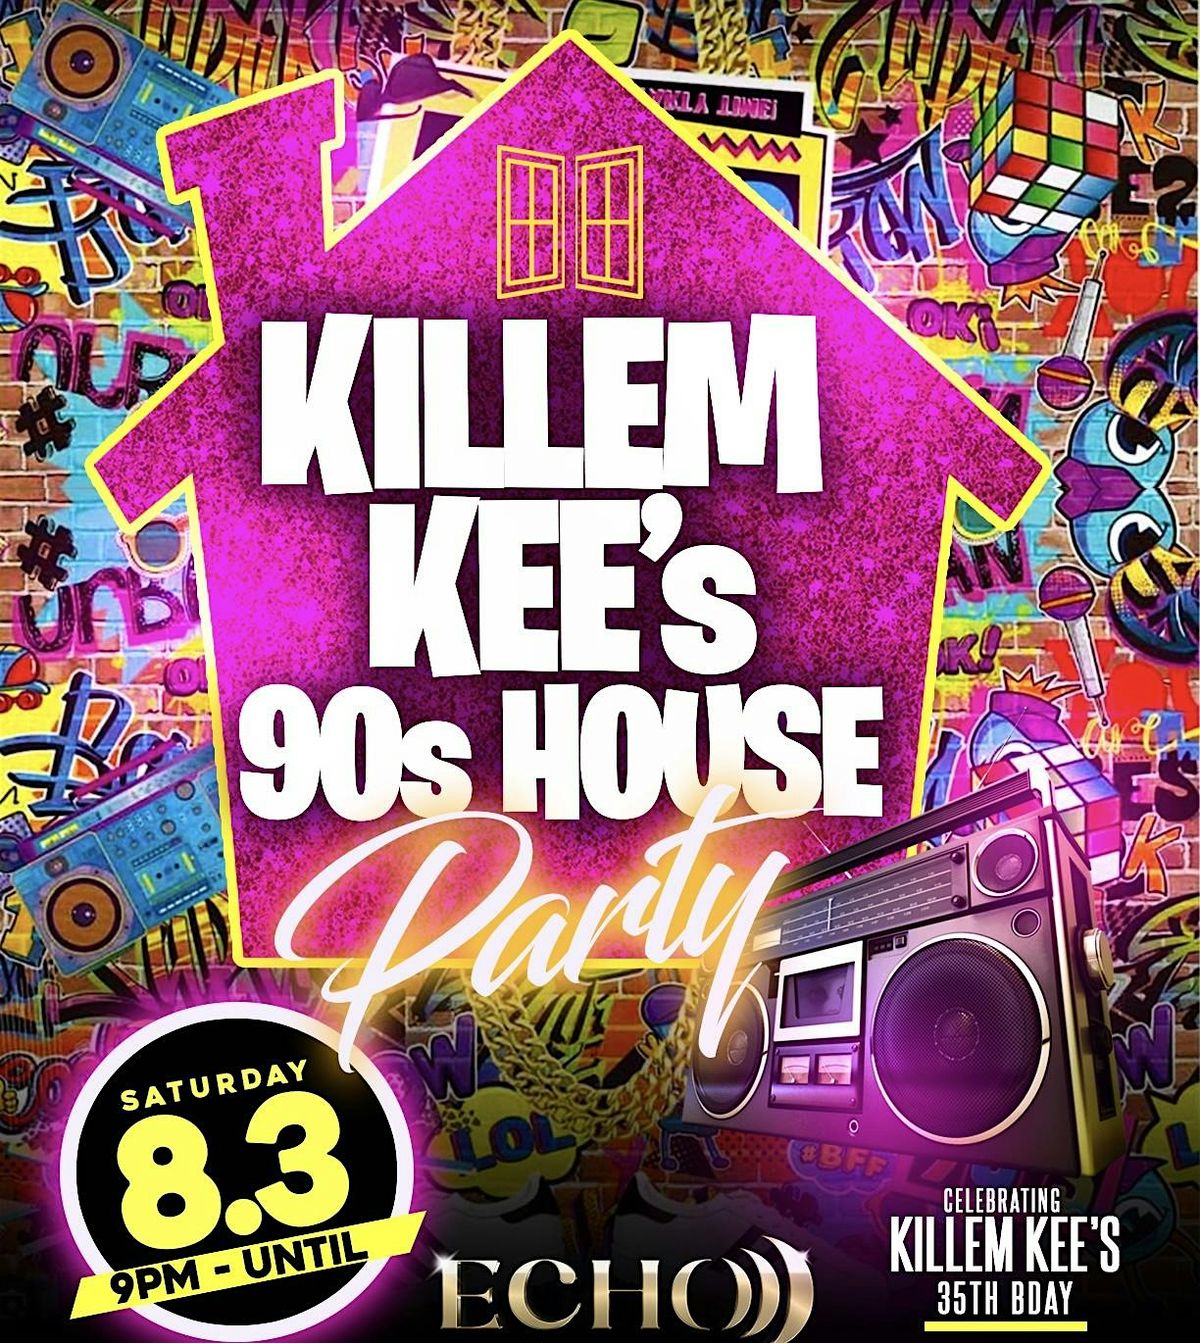 KillemKee\u2019s 90s House Party